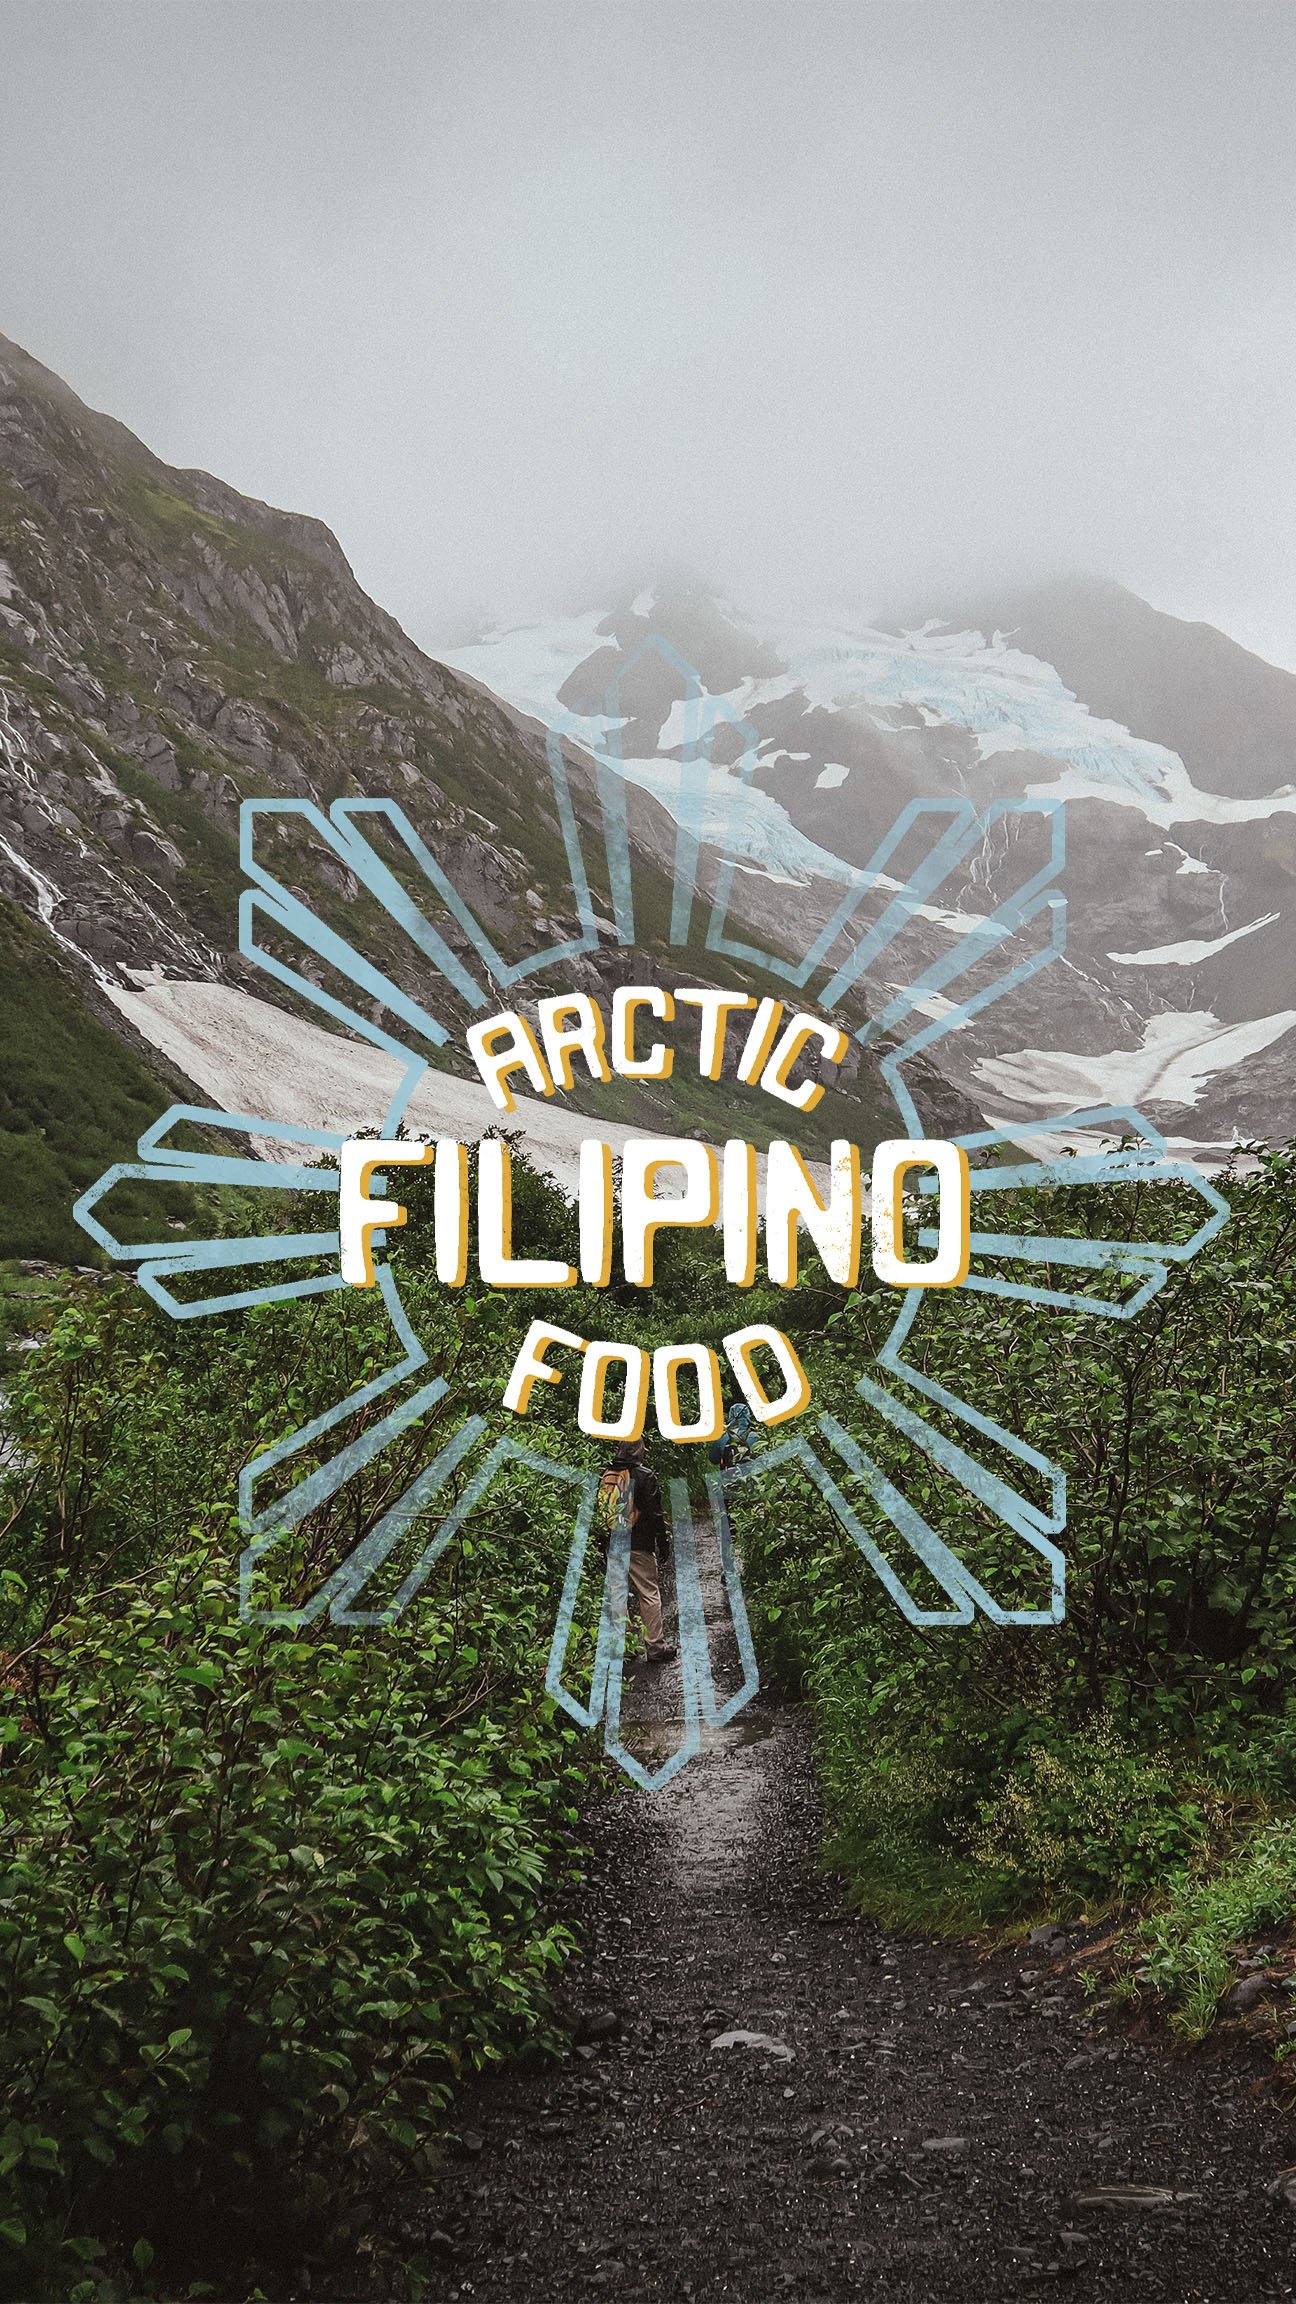 Arctic Filipino Food